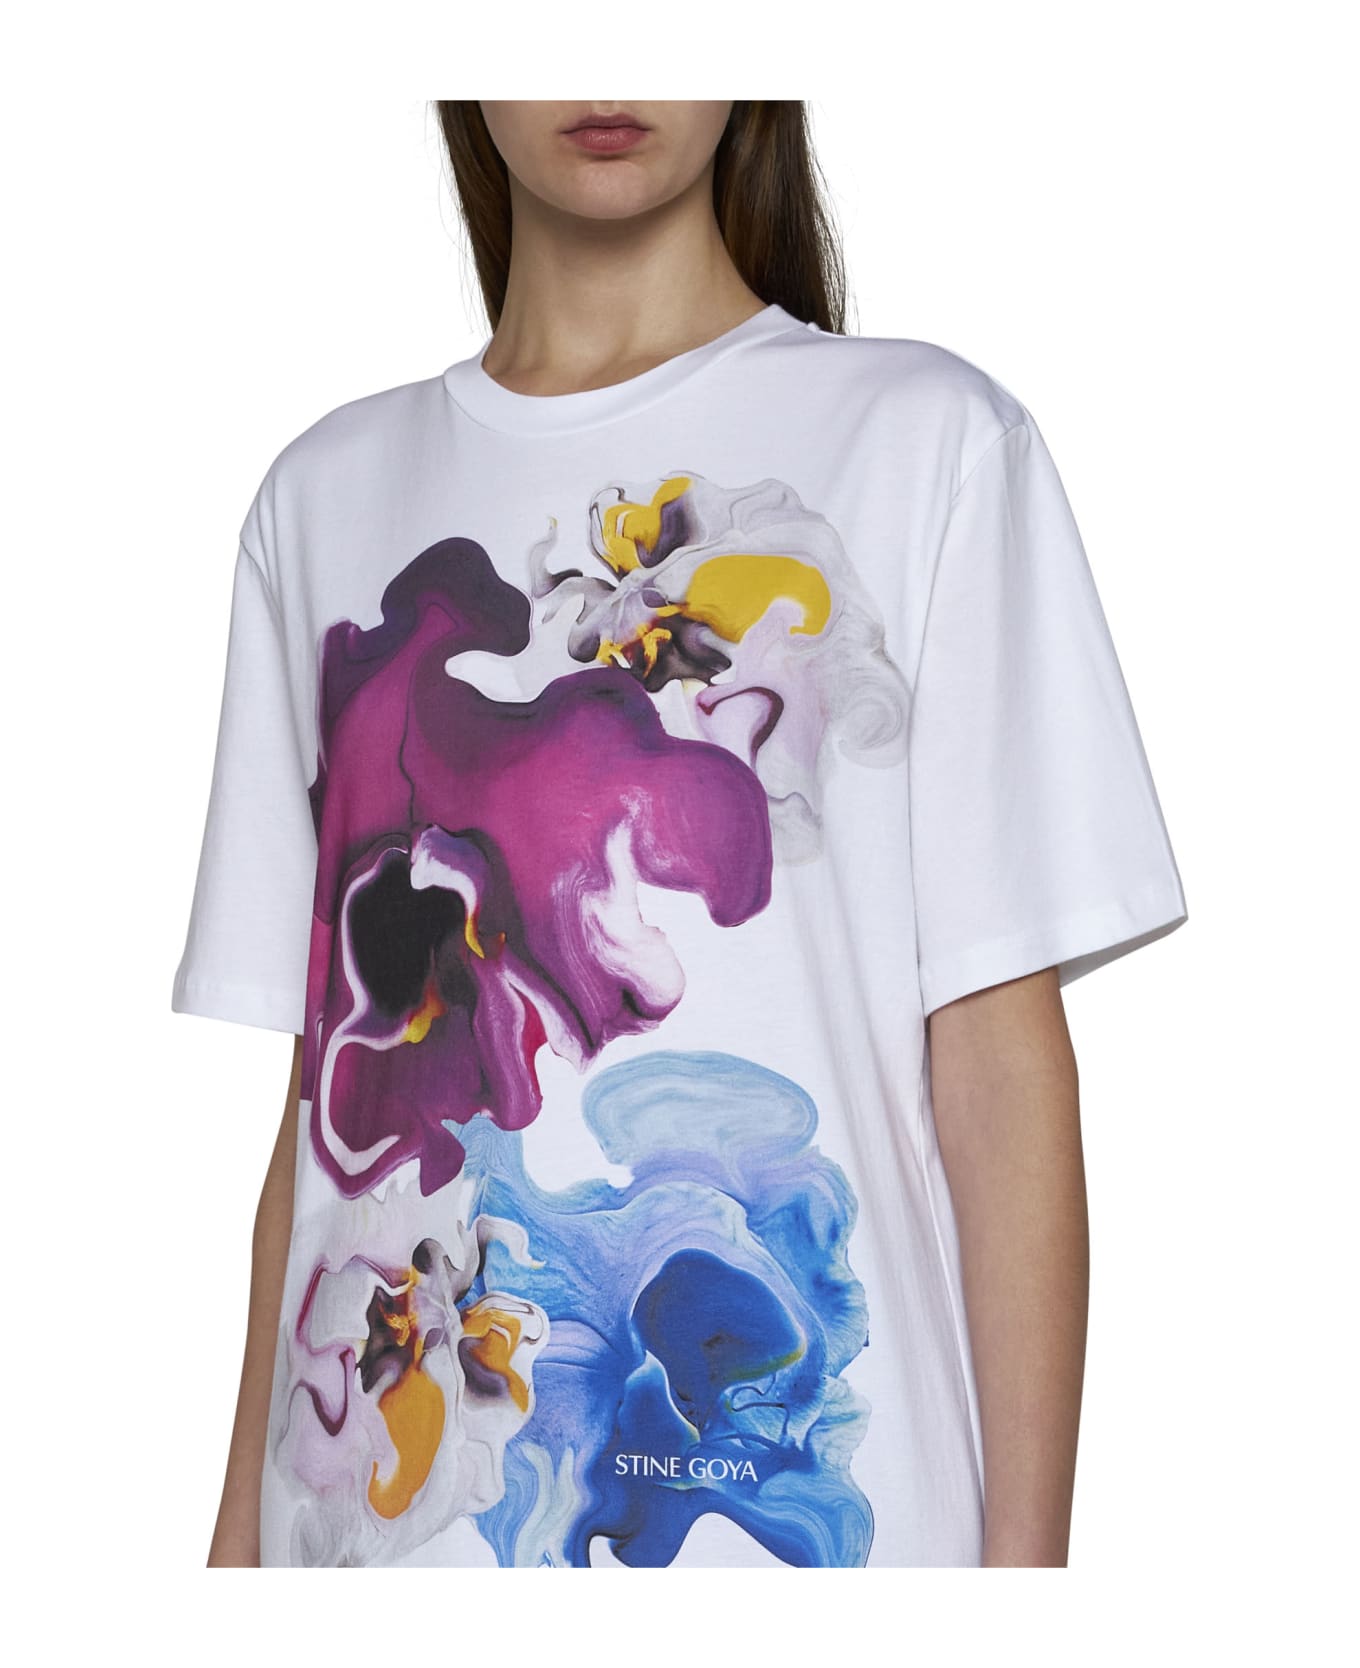 Stine Goya T-Shirt - Wild orchid Tシャツ